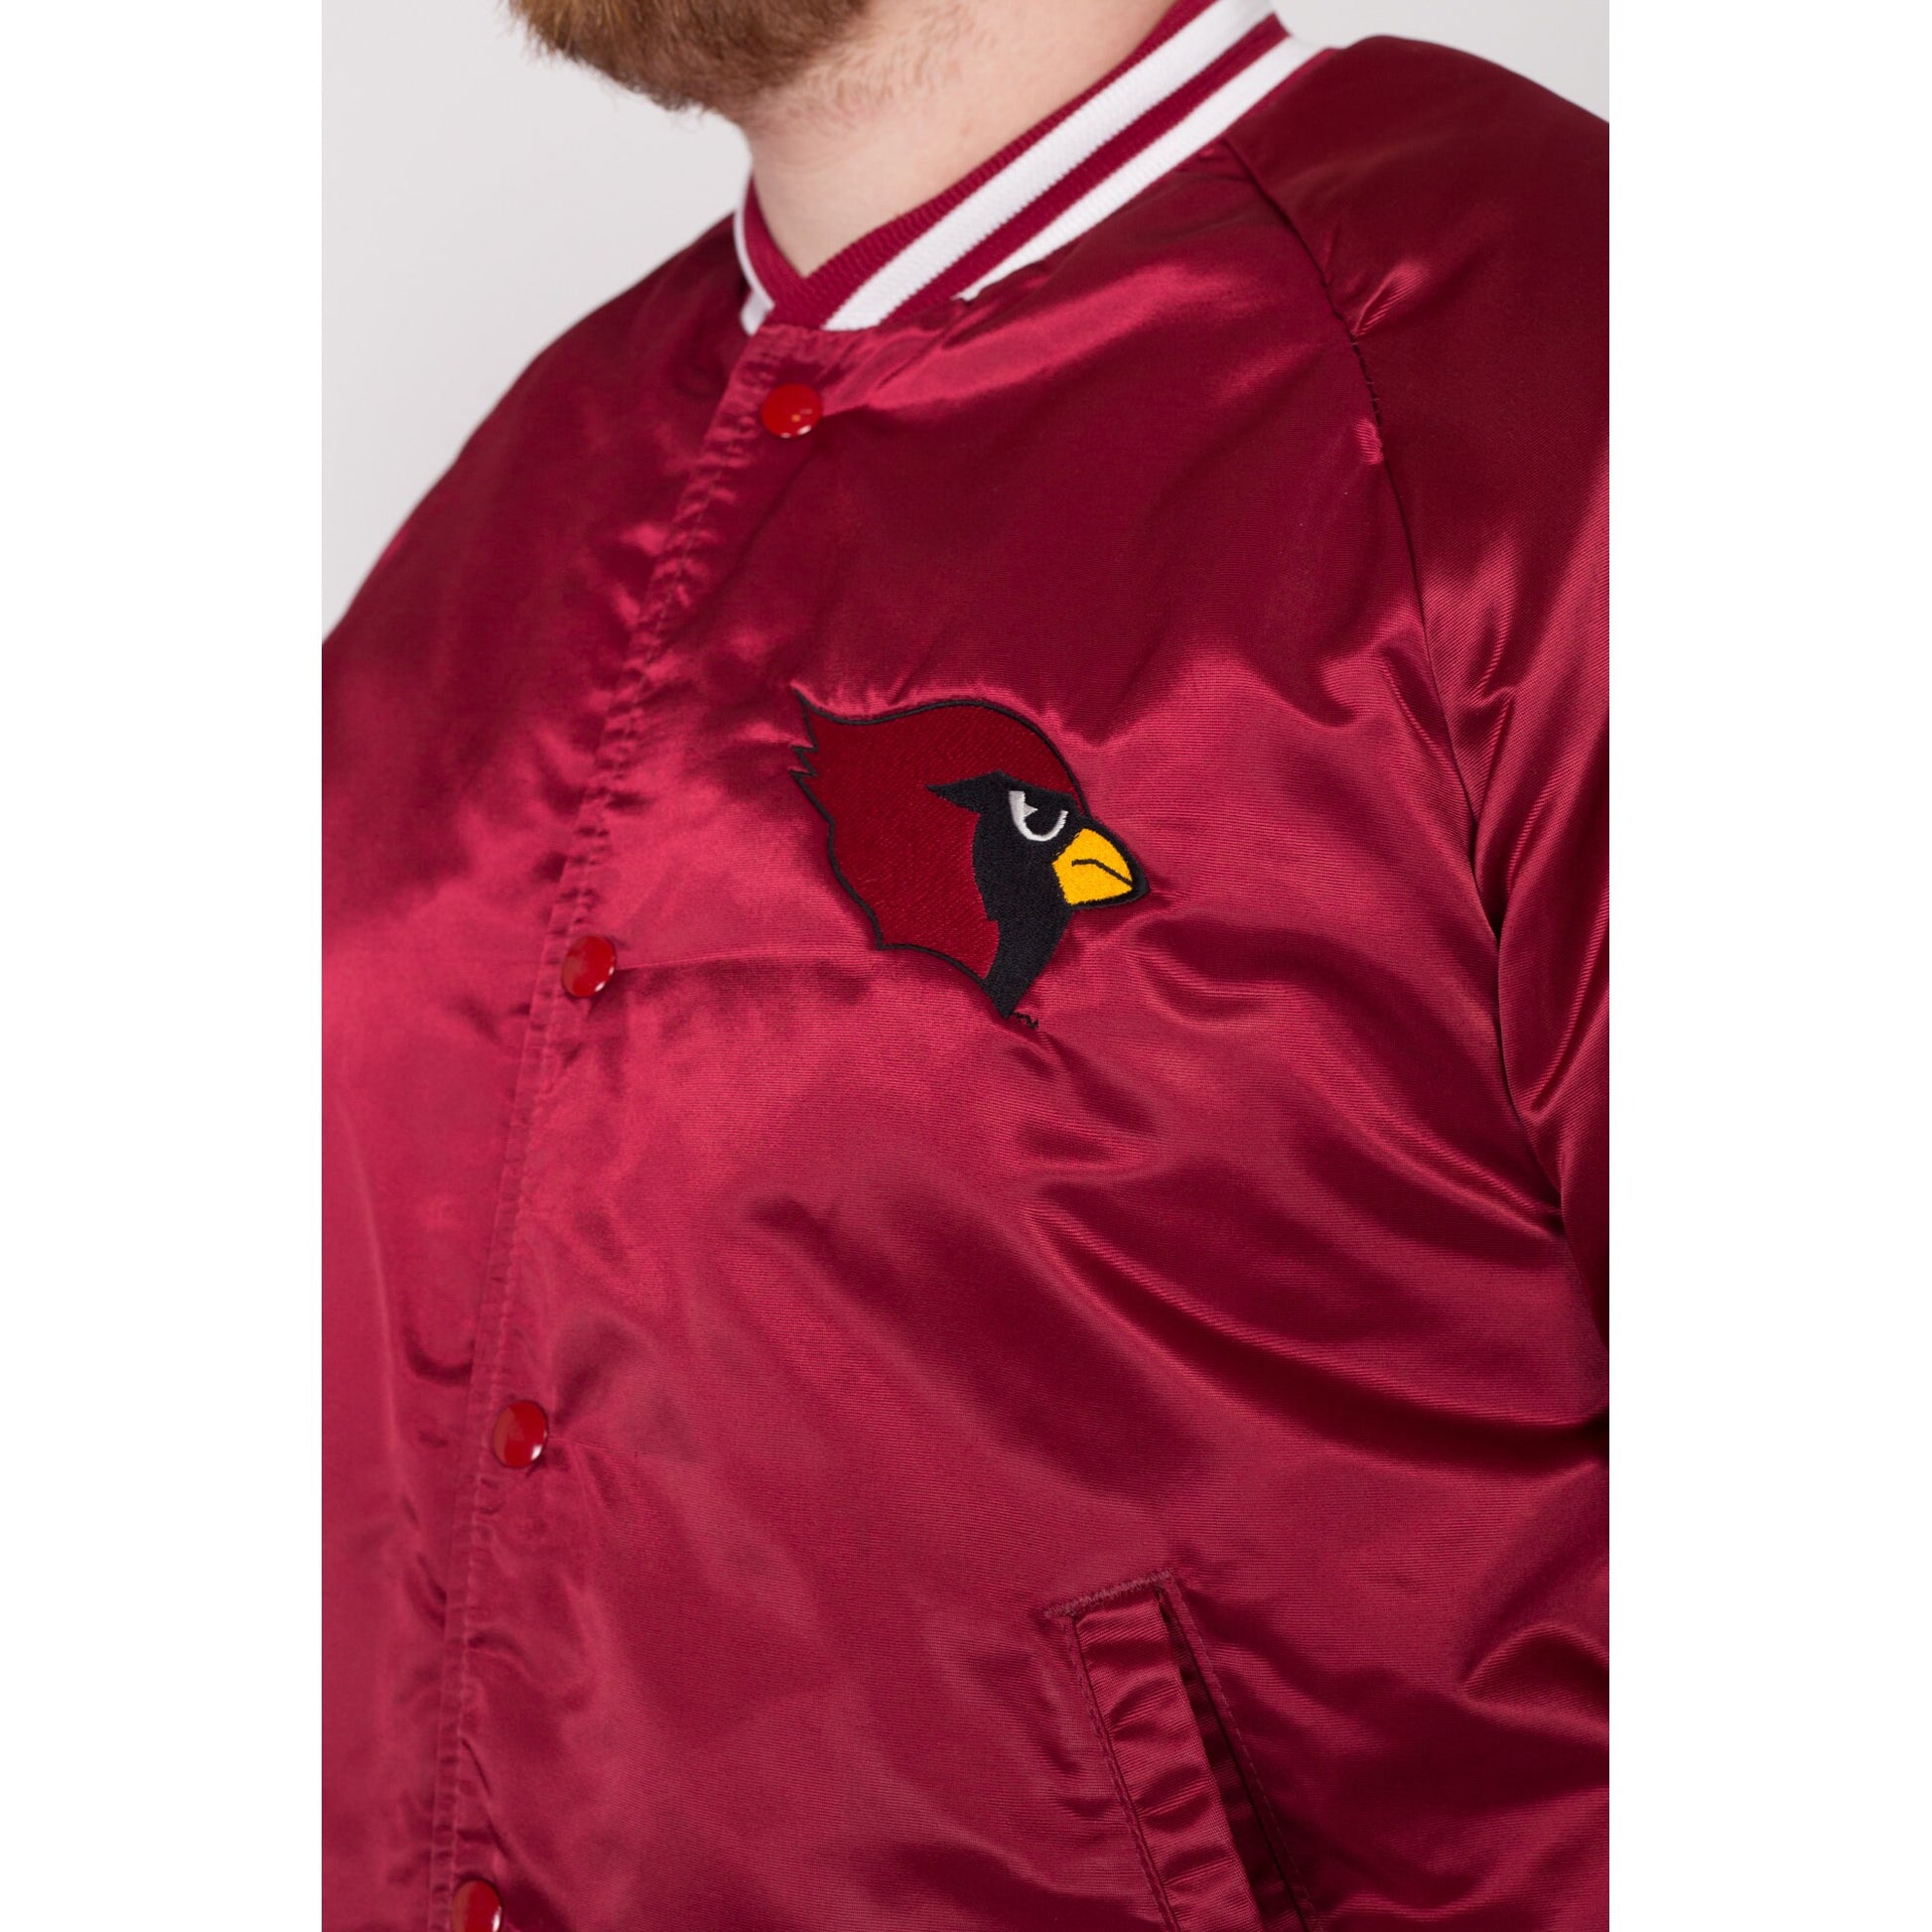 Large 80s Arizona Cardinals NFL Satin Bomber Jacket | Vintage Football Cardinal Red Snap Button Athletic Varsity Windbreaker